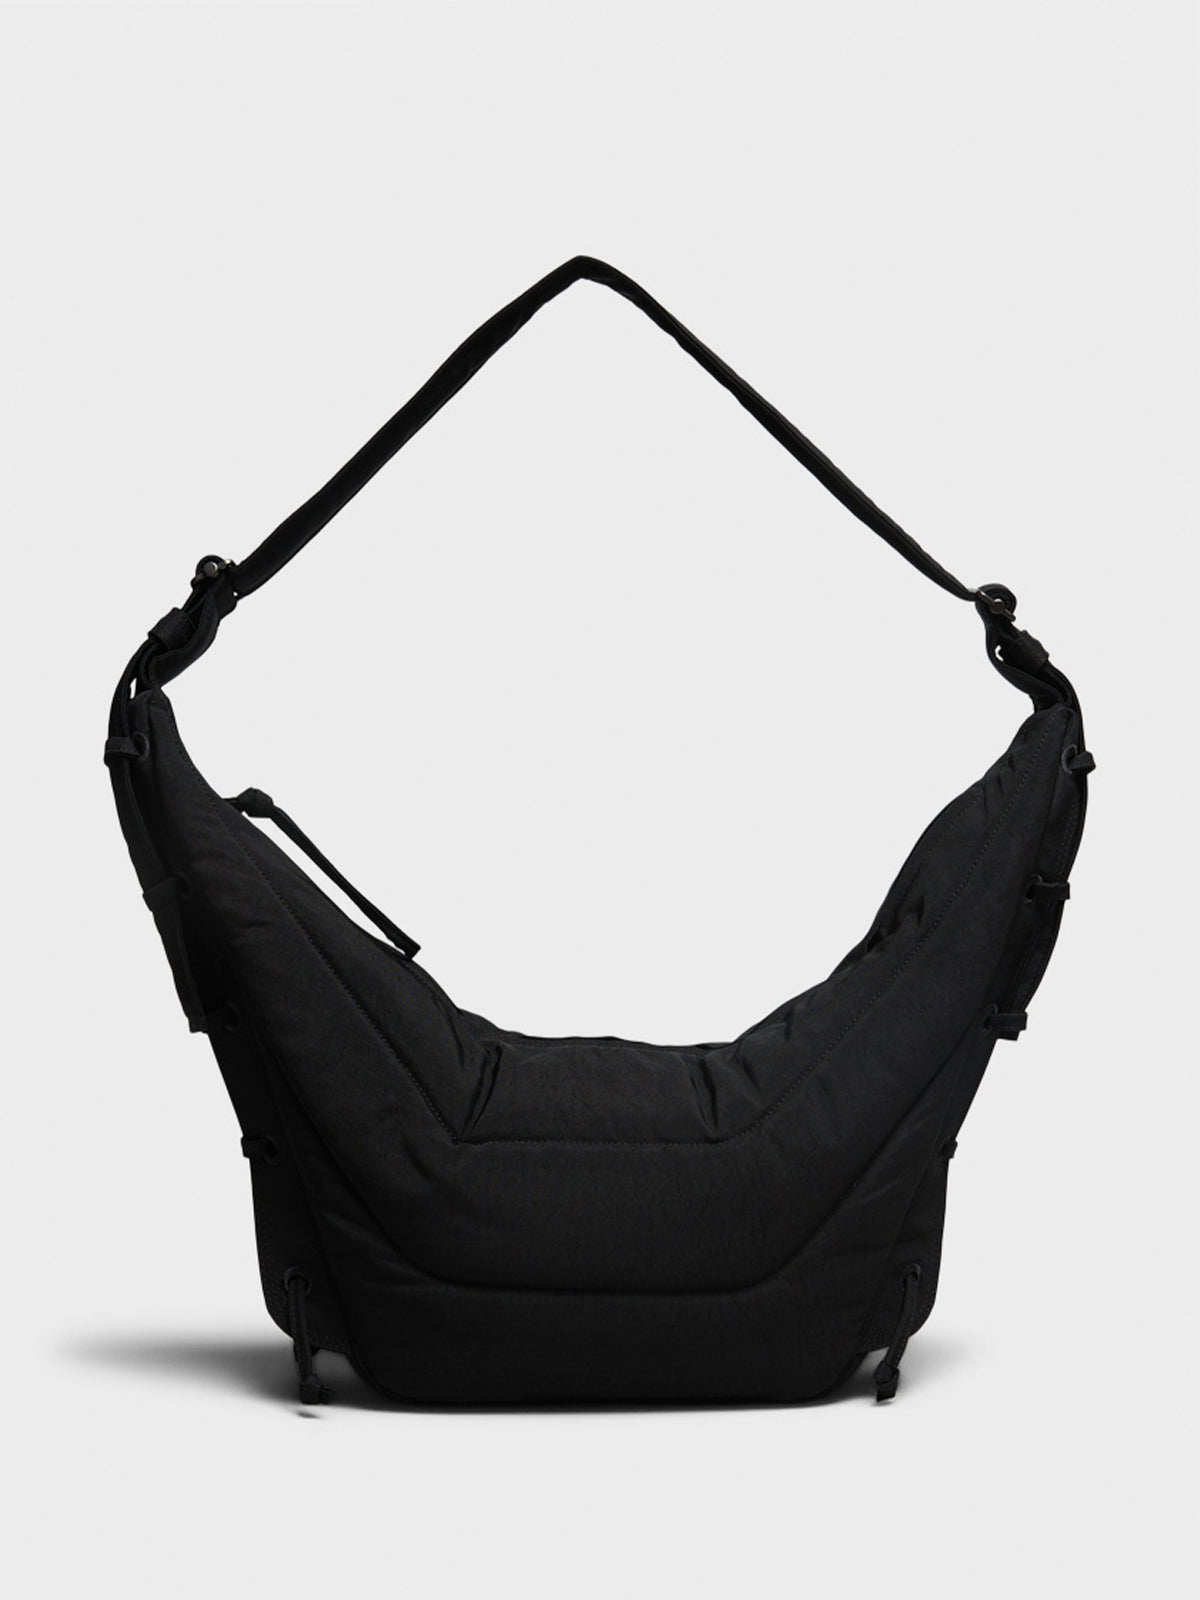 Medium Soft Game Bag in Black